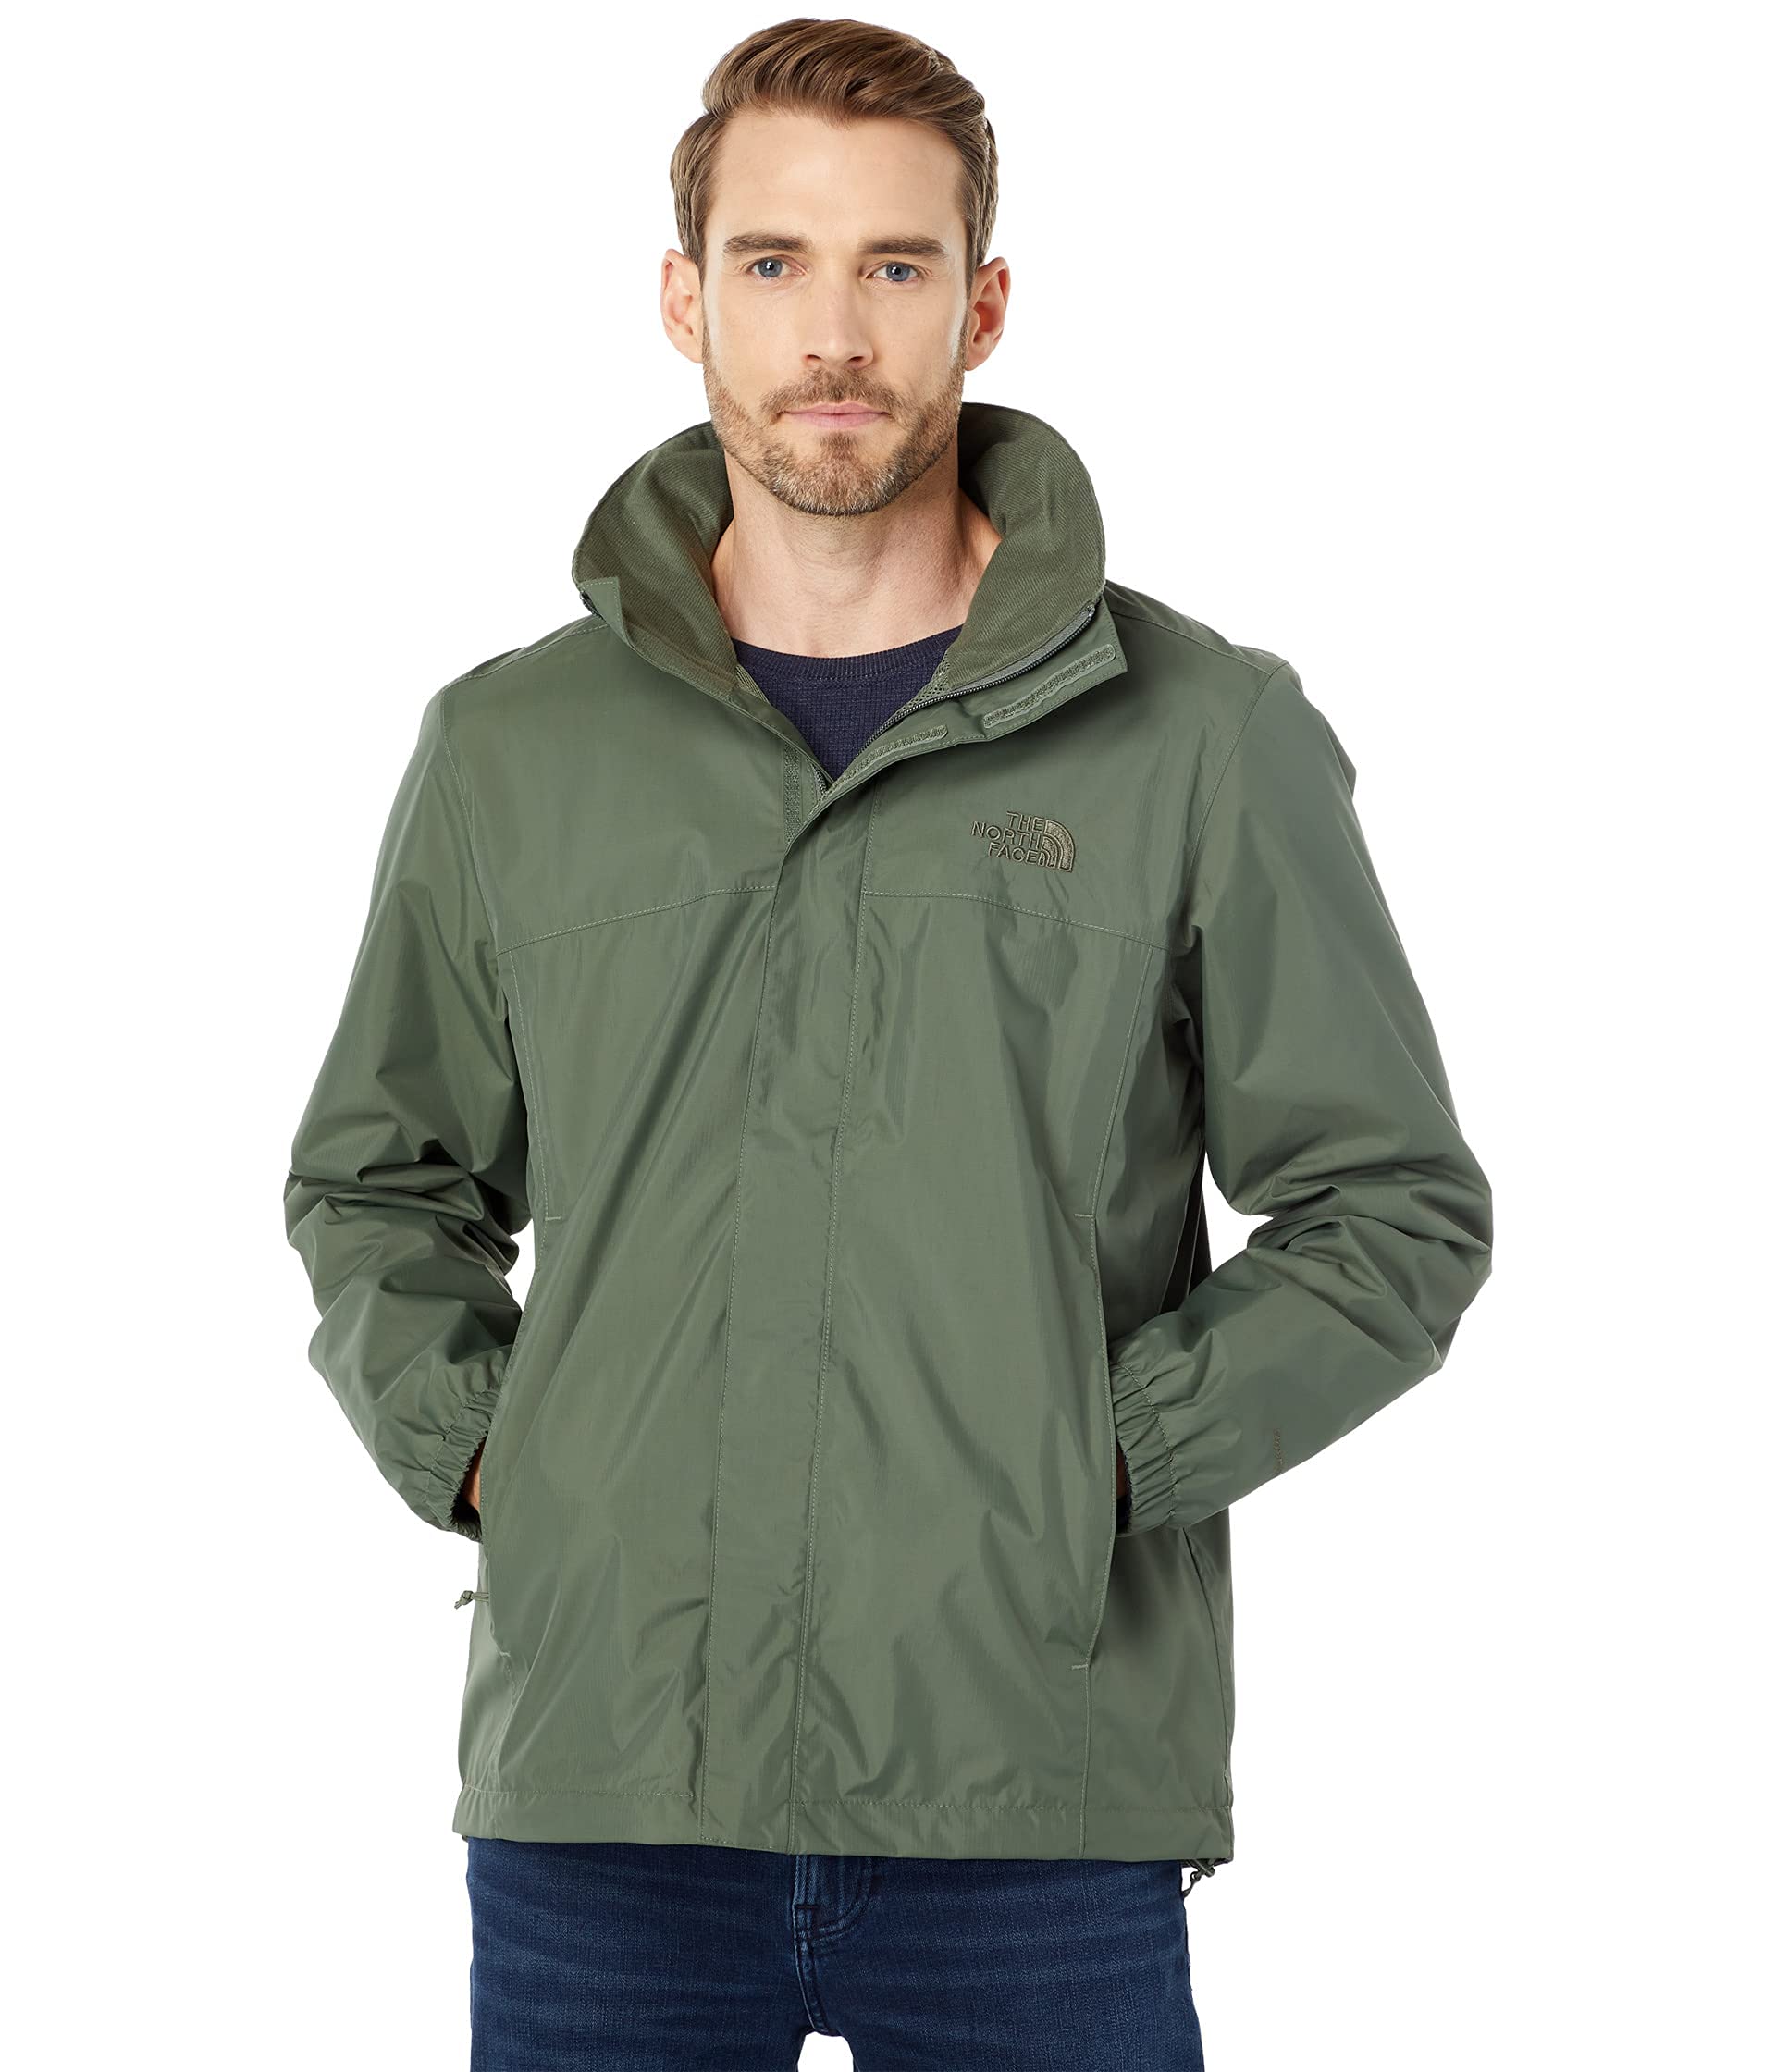 The North Face Men's Resolve 2 Waterproof Hooded Rain Jacket